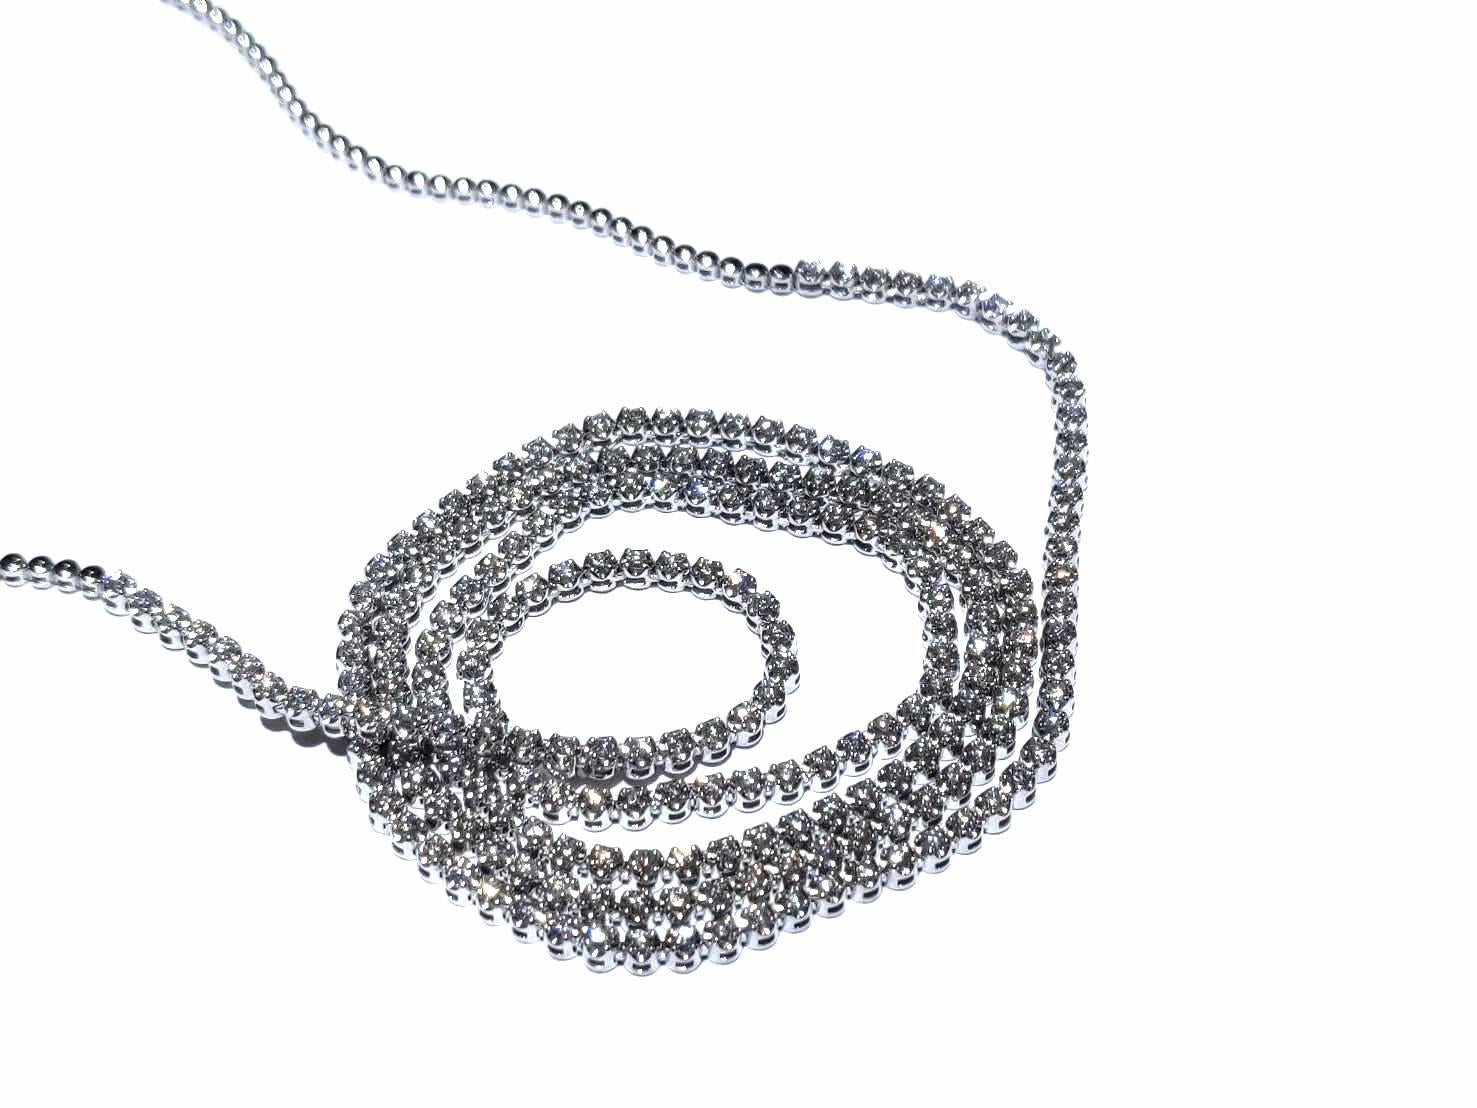 Brilliant Cut 7.80 Carat Diamond Long Tennis Necklace in 18K White Gold For Sale